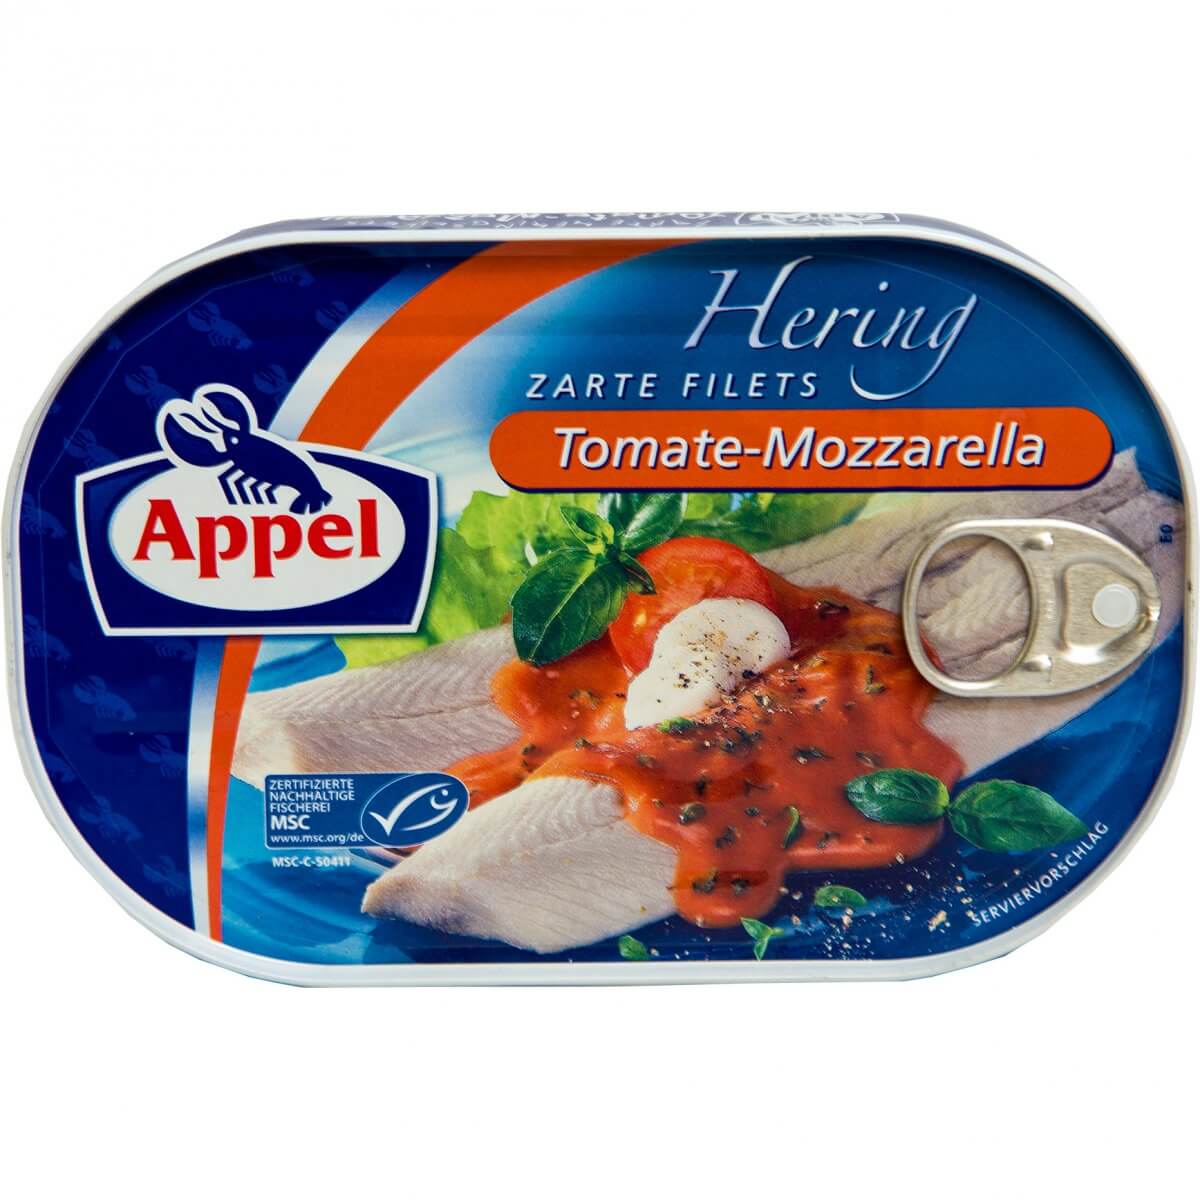 Appel Herring Zarte Filets Tomato Mozzarella 200g – International Food Shop